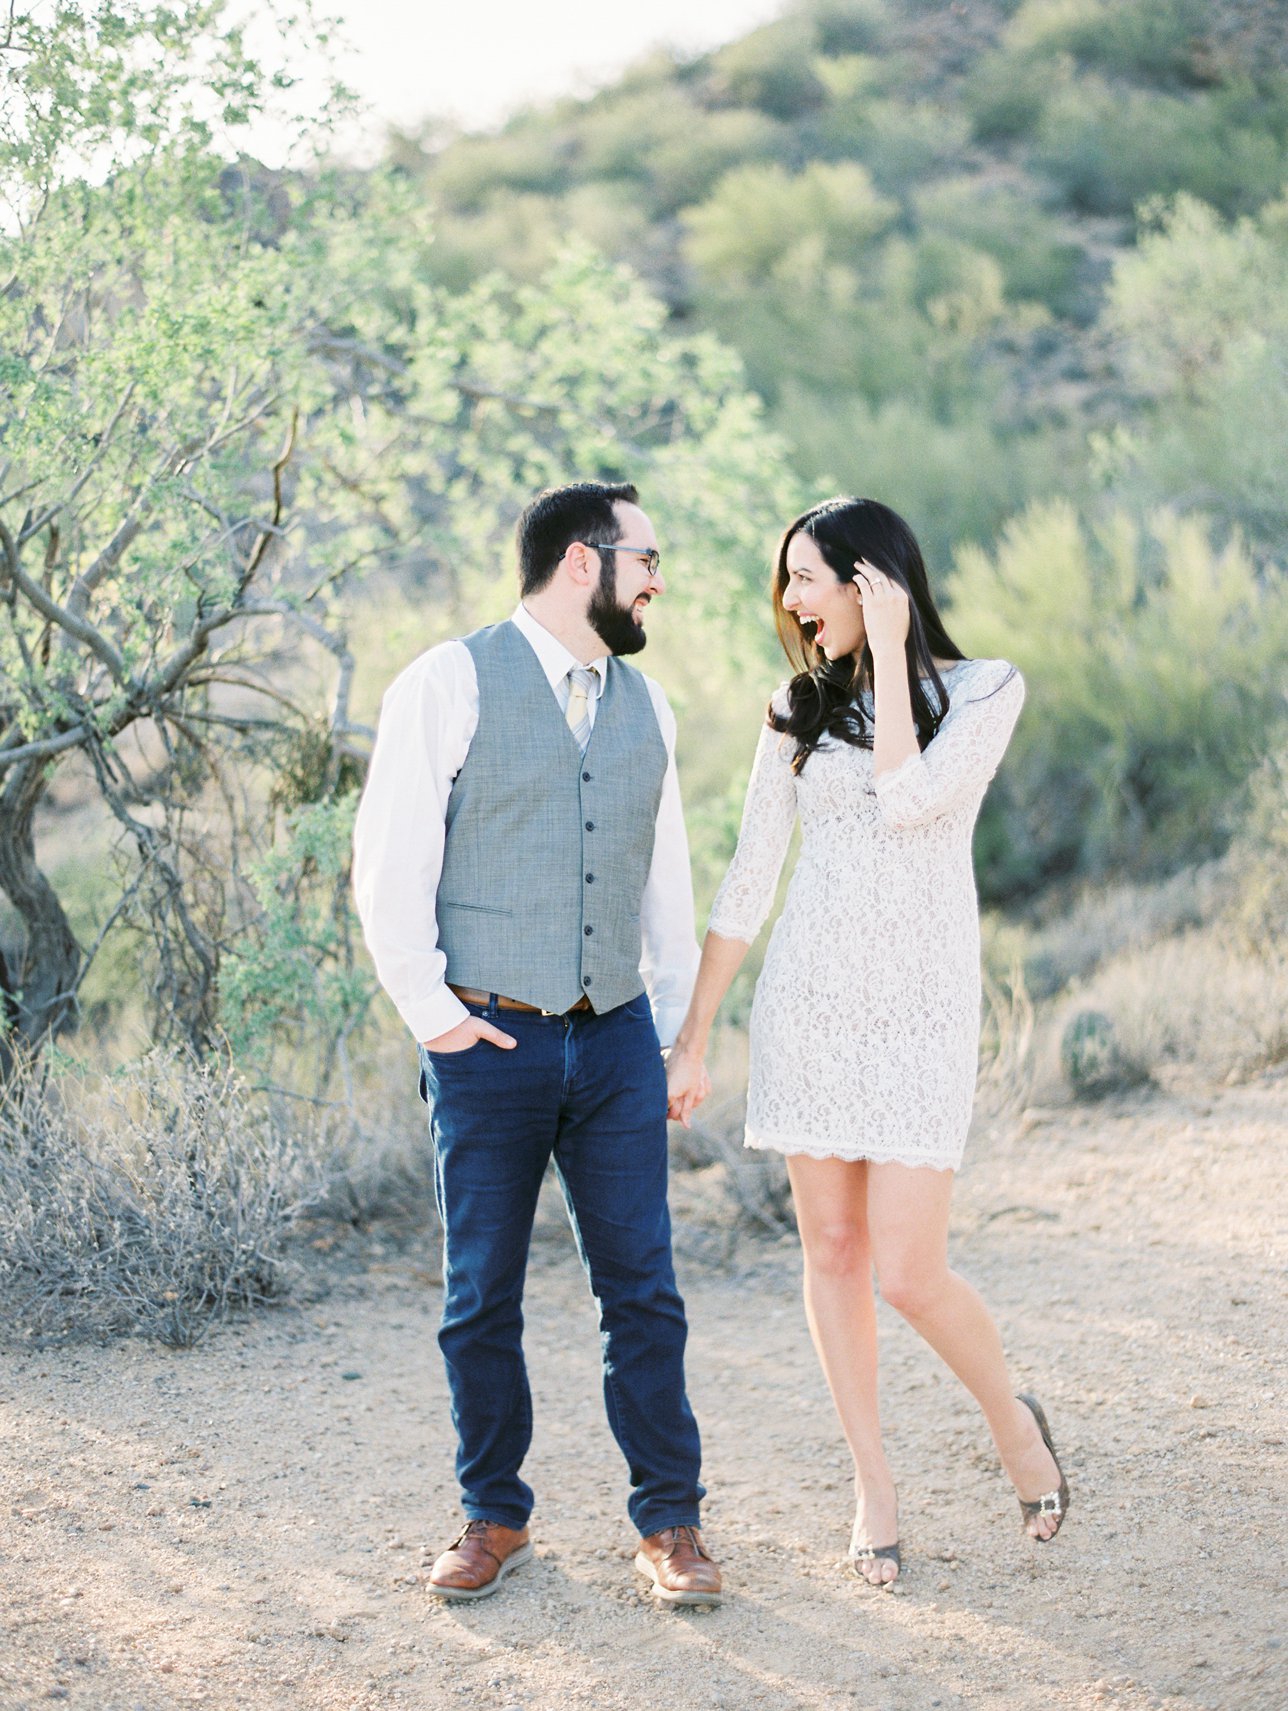 Arizona Desert engagement photos - Rachel Solomon Photography Blog - Phoenix Wedding Photographer